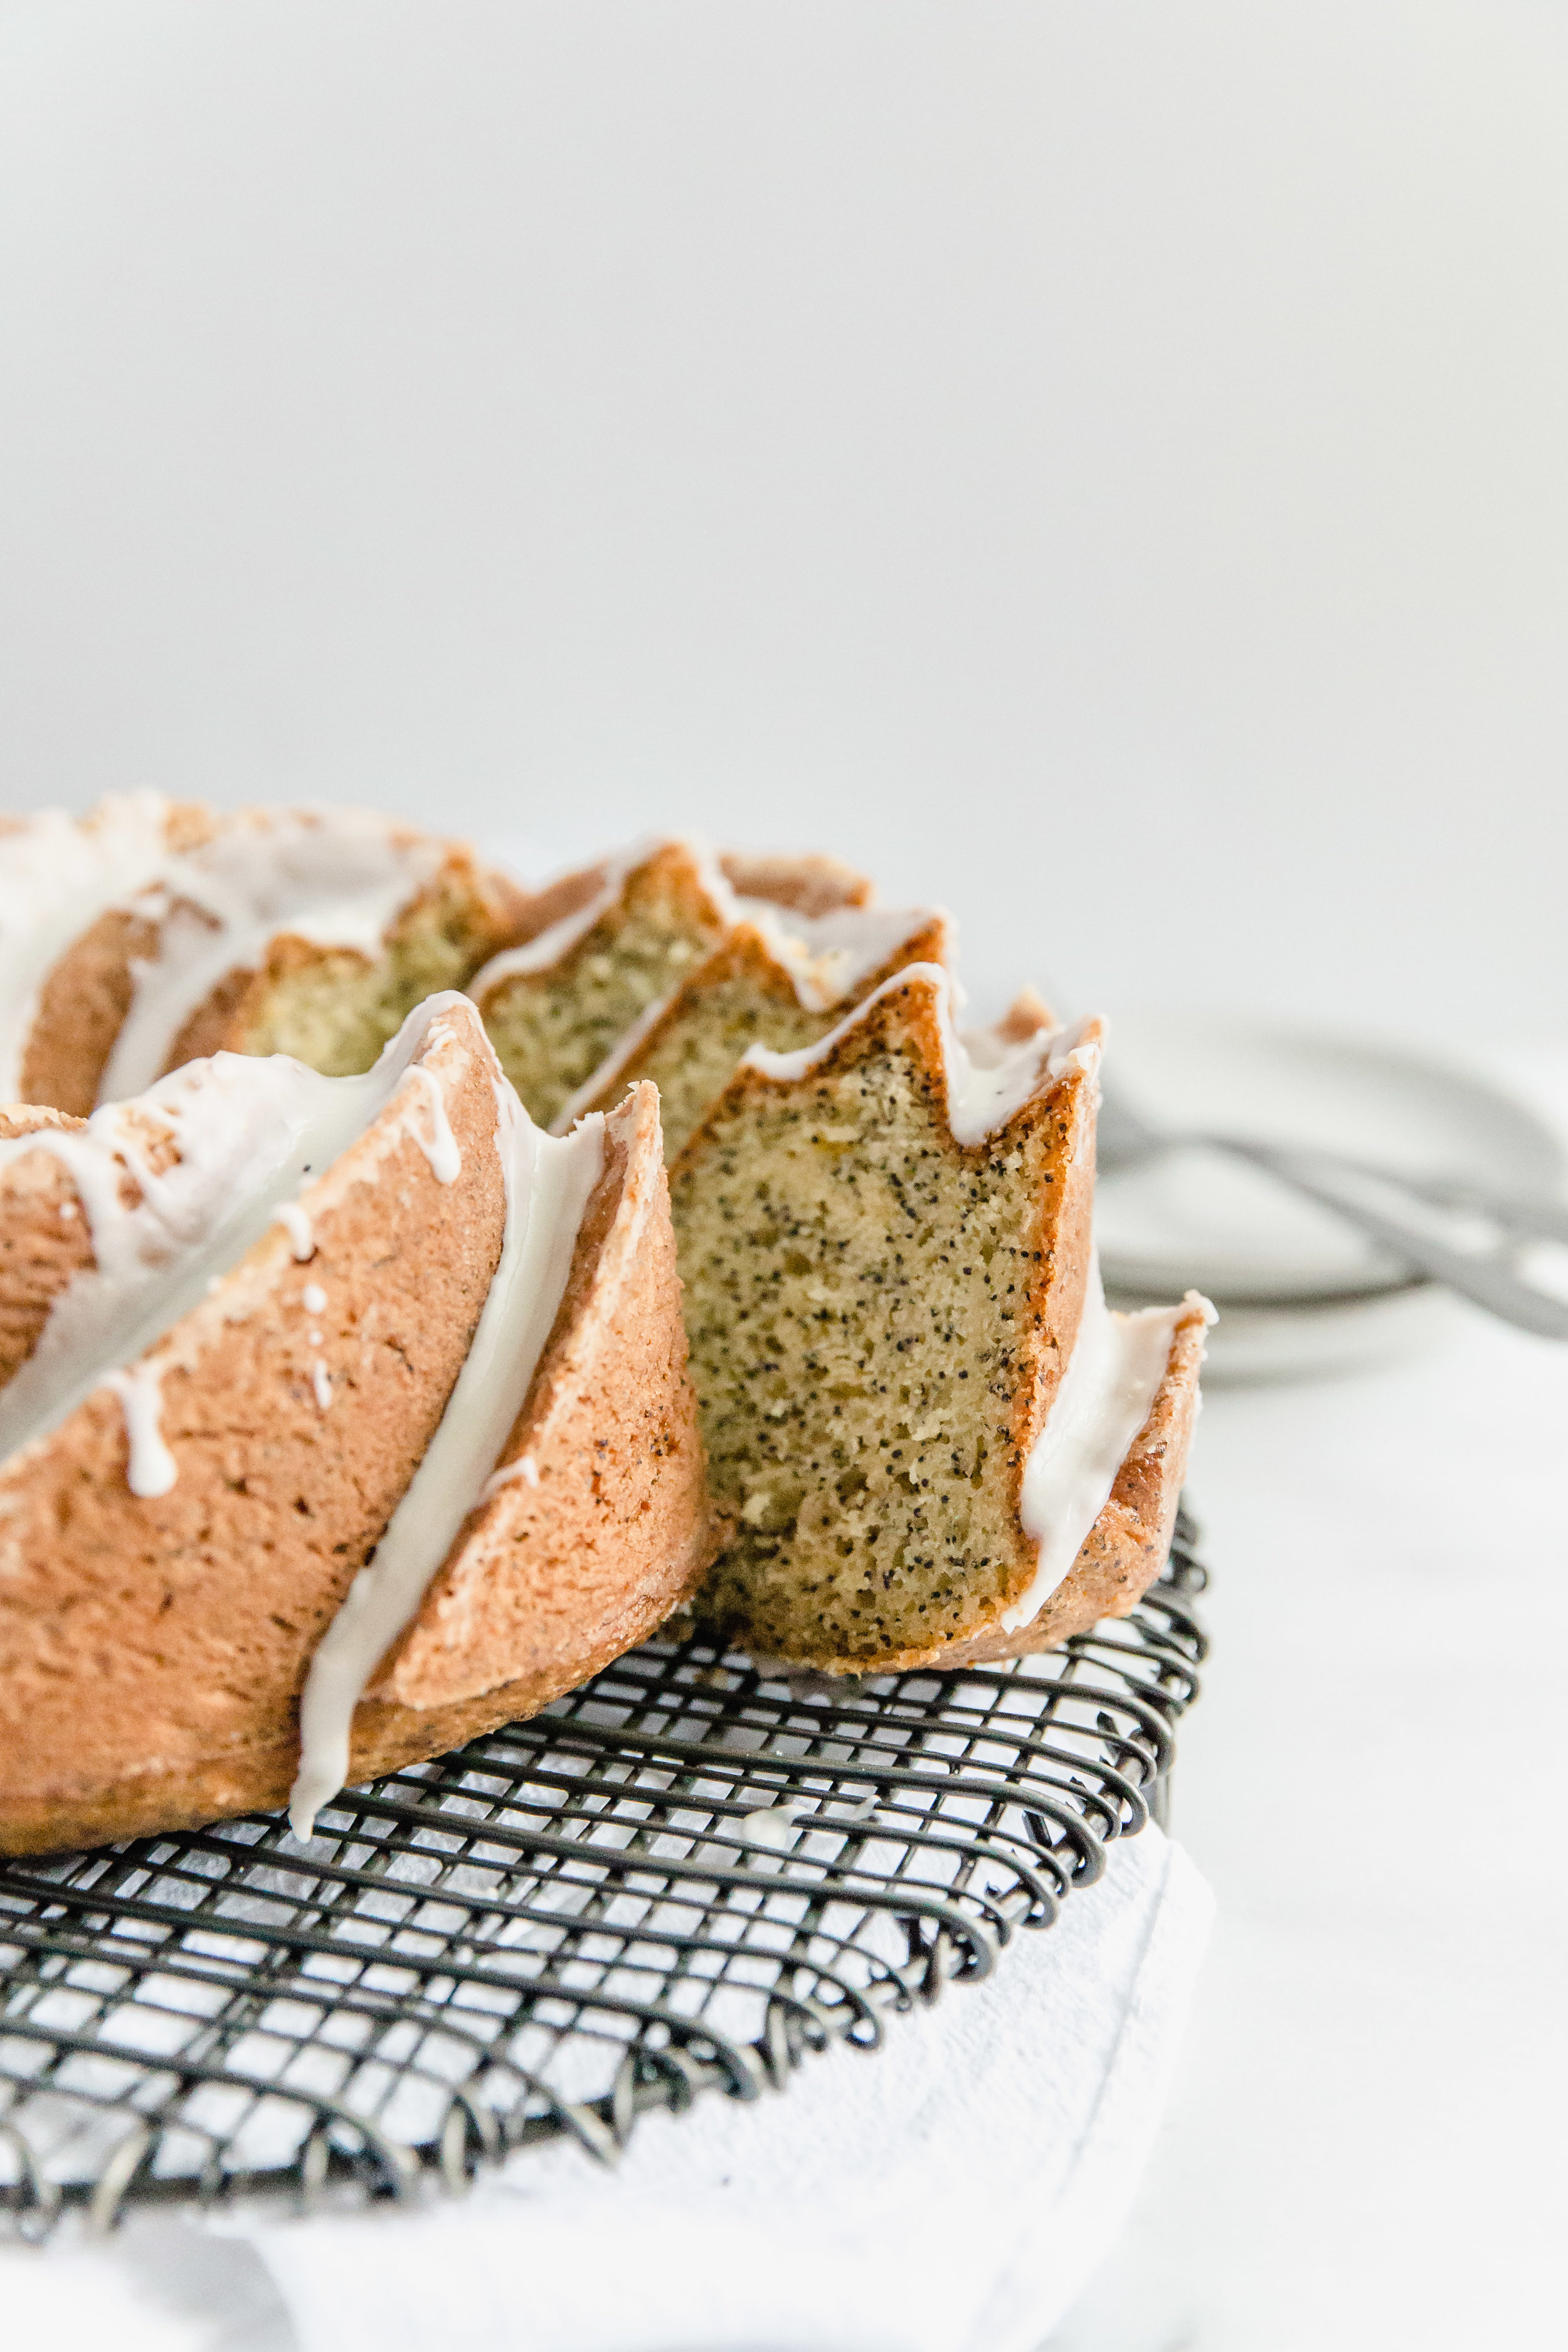 lemon-poppy-seed-bundt-cake-with-lemon-glaze-7.jpg